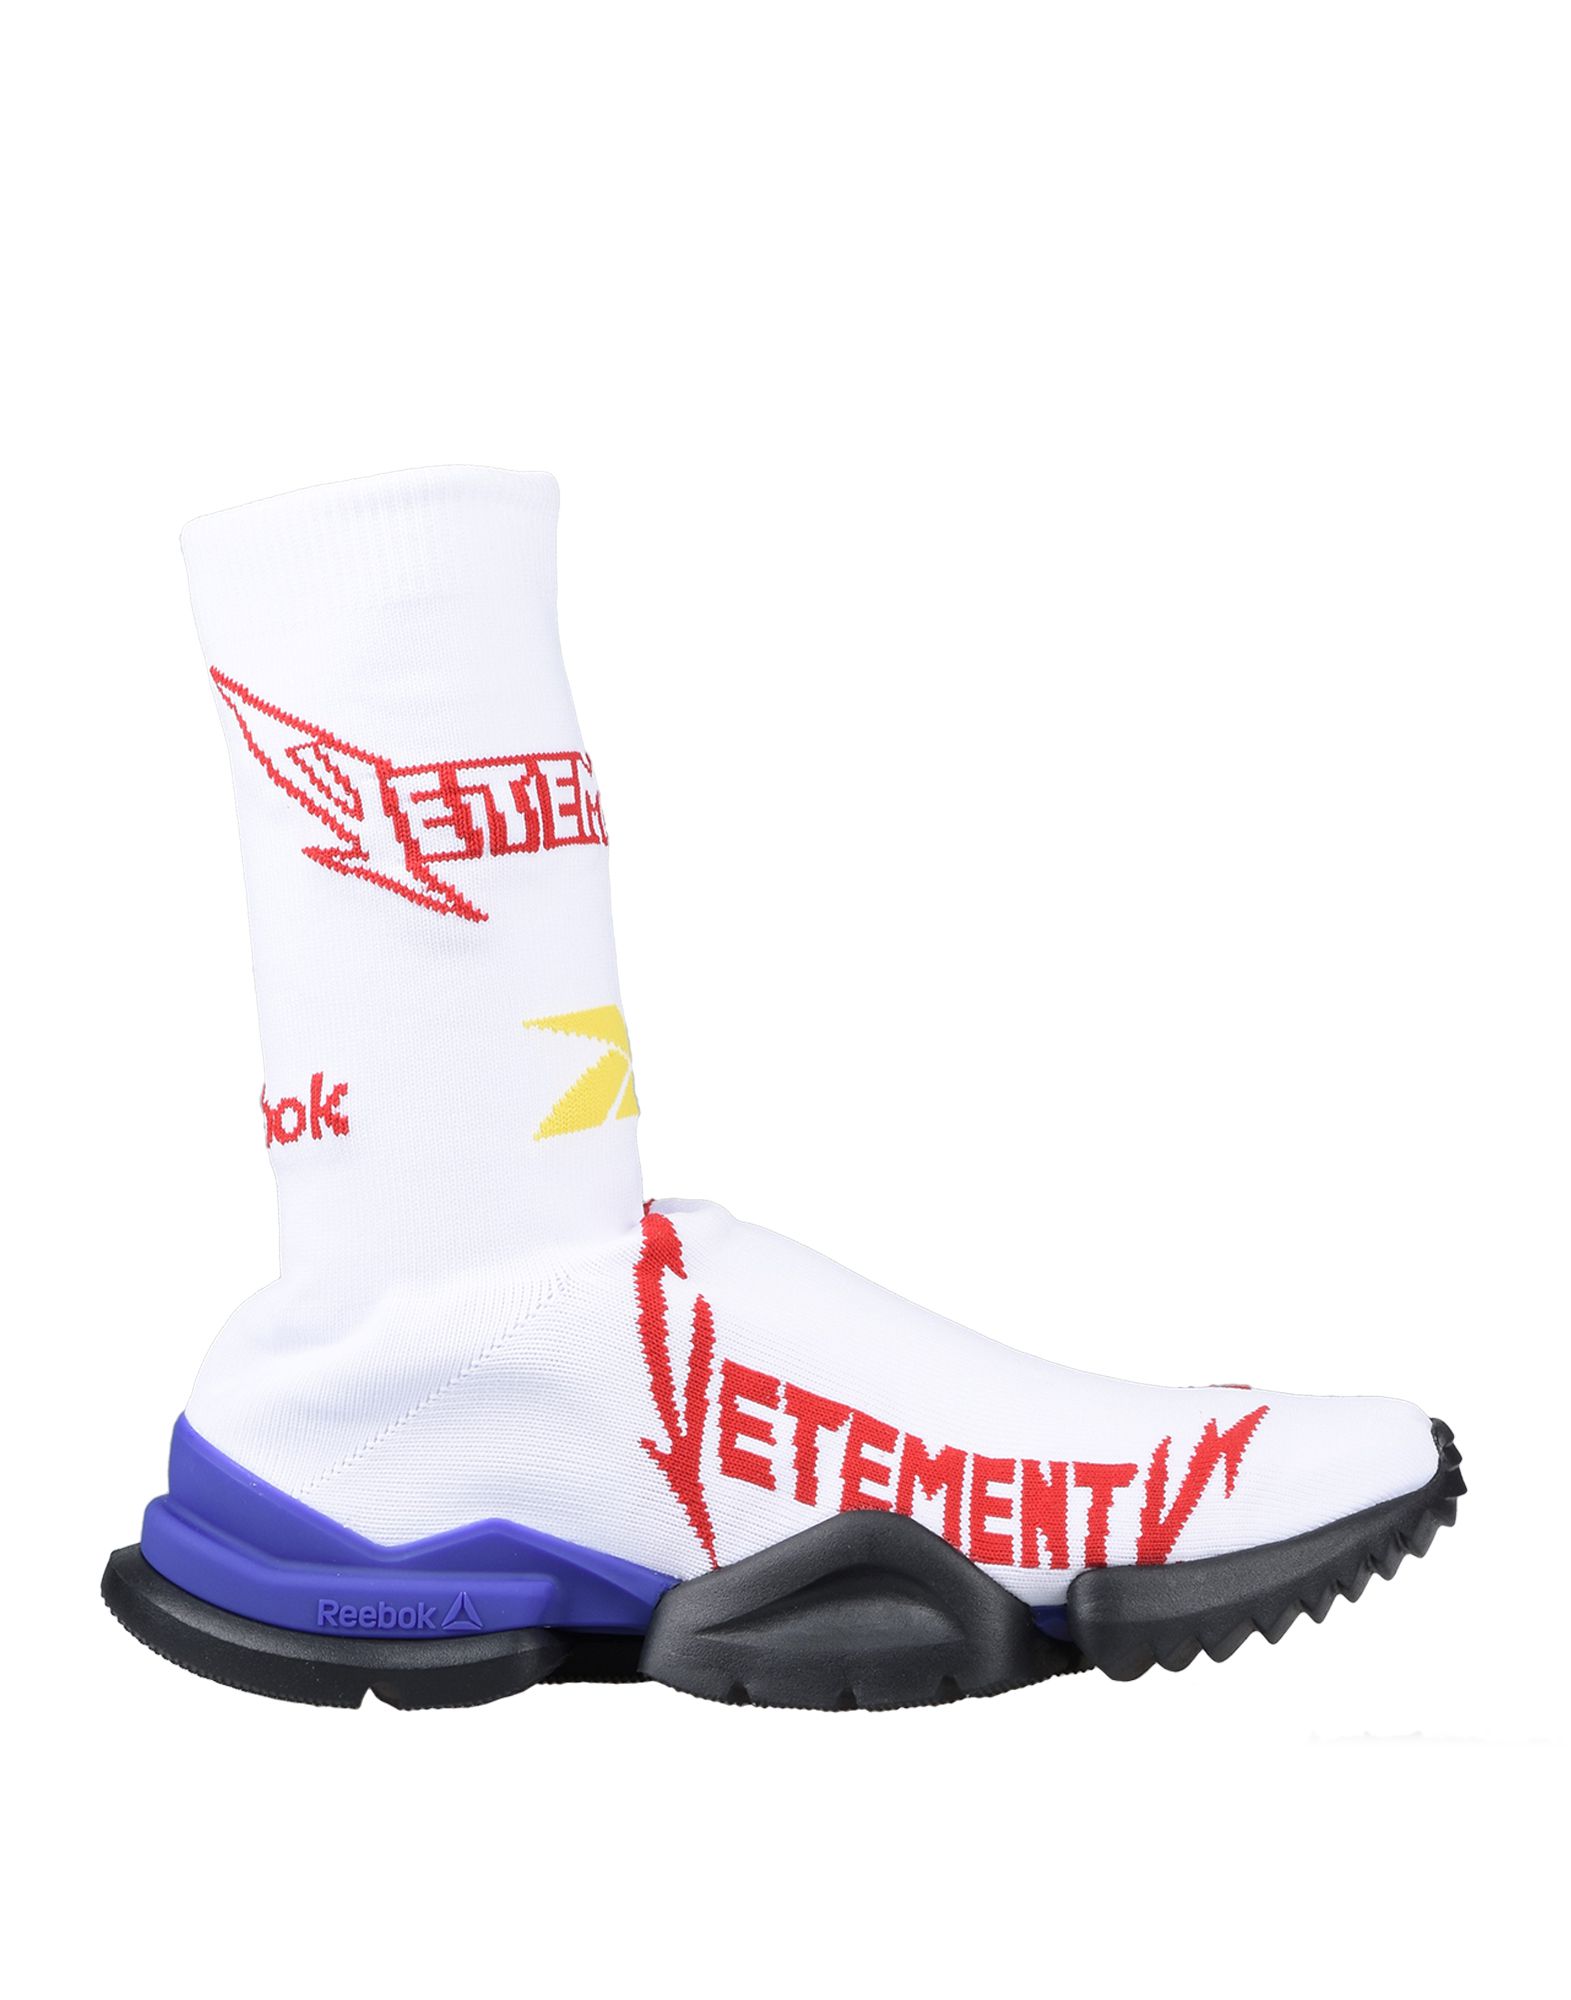 reebok x vetements shoes